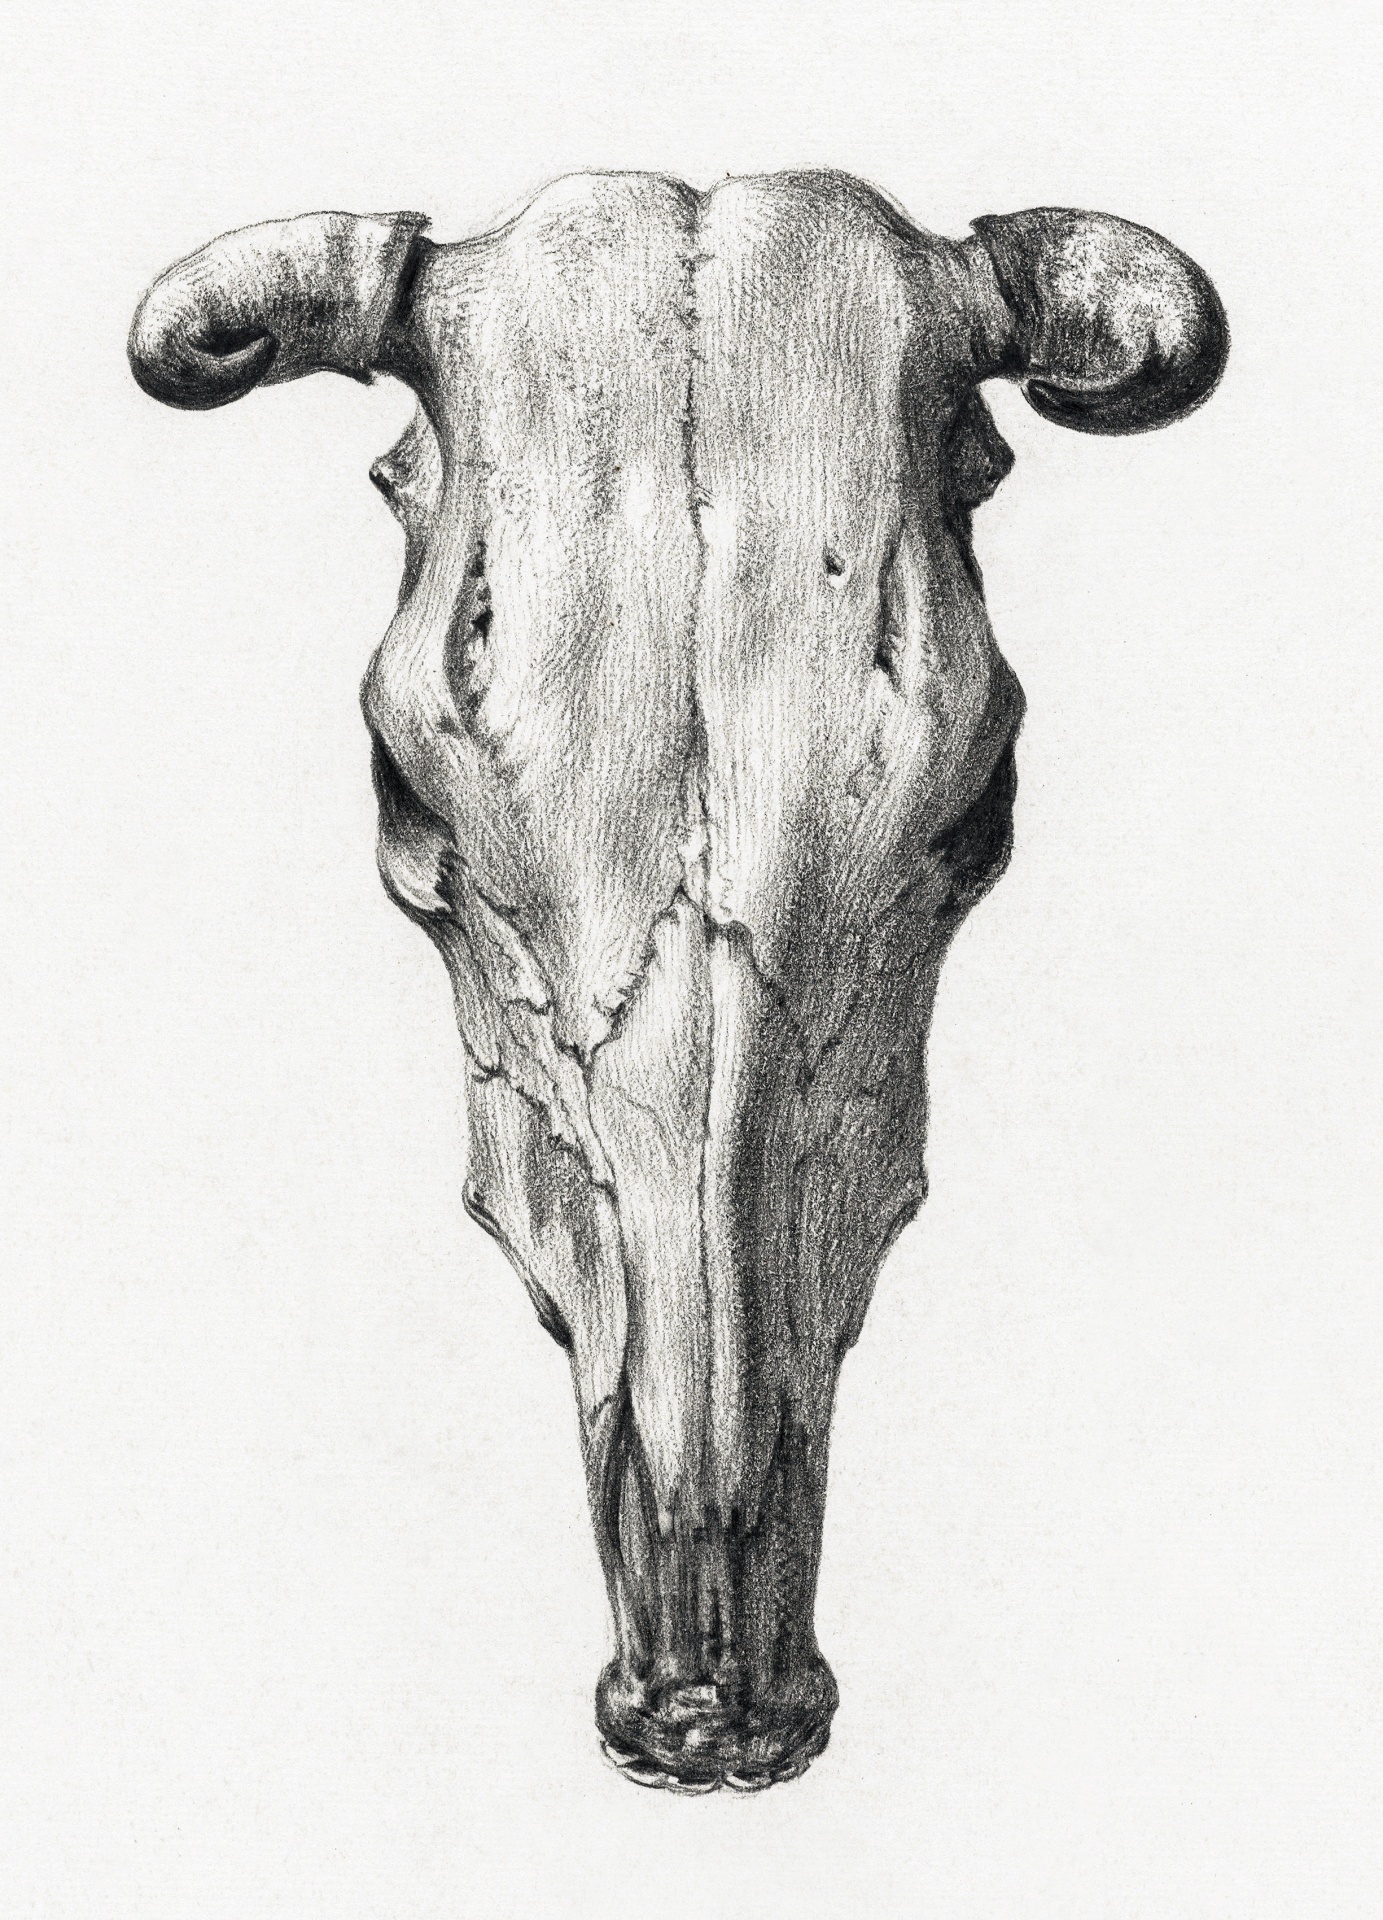 Skull cattle horns vintage art old 1900 century hand painted illustration antique art decorative illustration graphic dead head bull